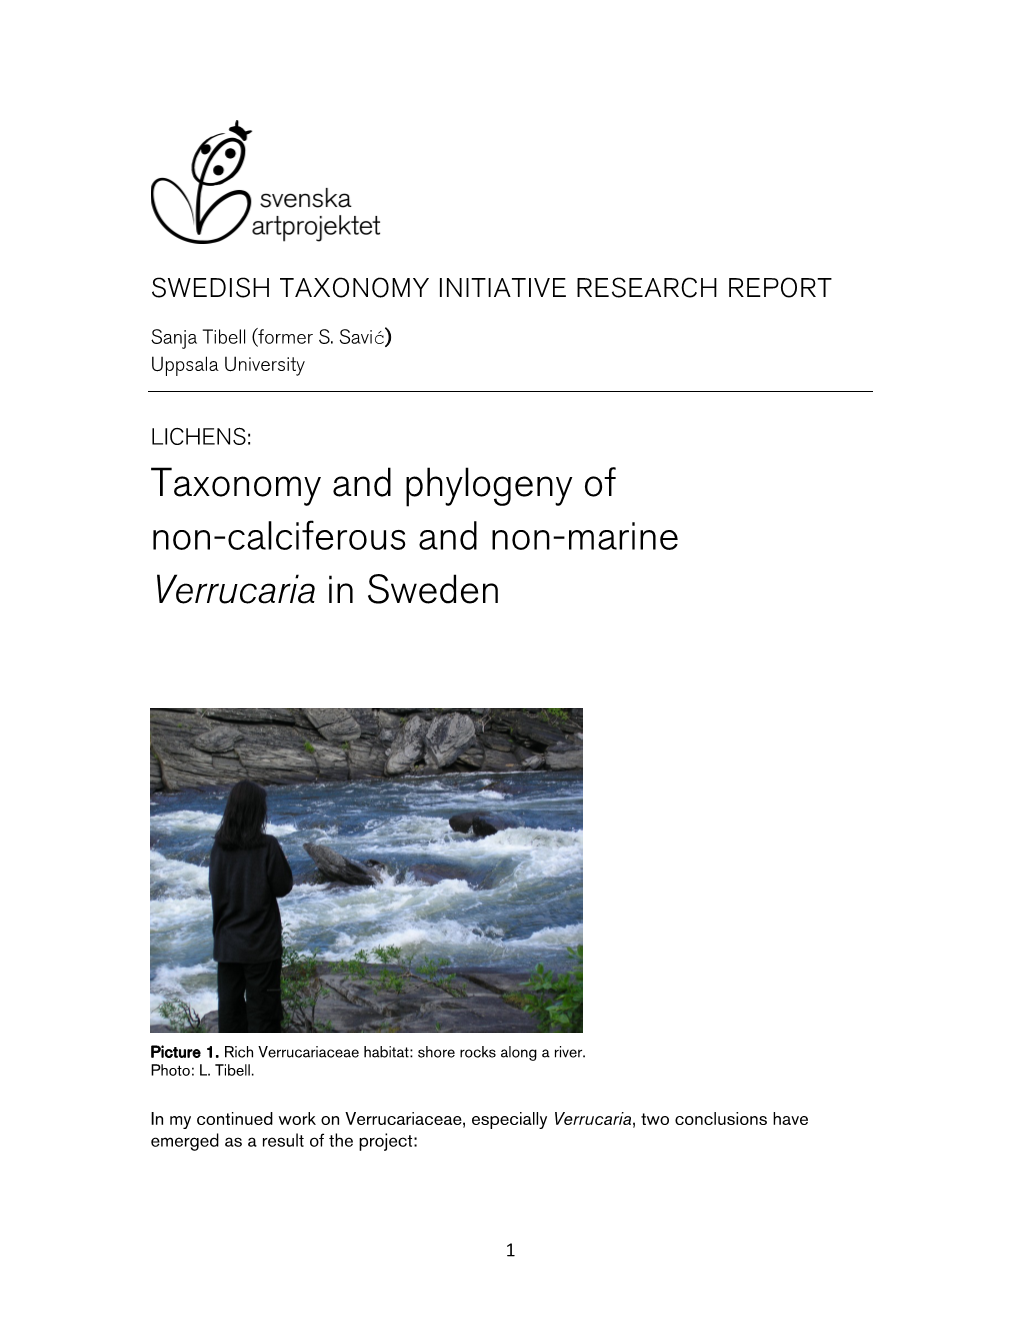 Swedish Taxonomy Initiative Research Report